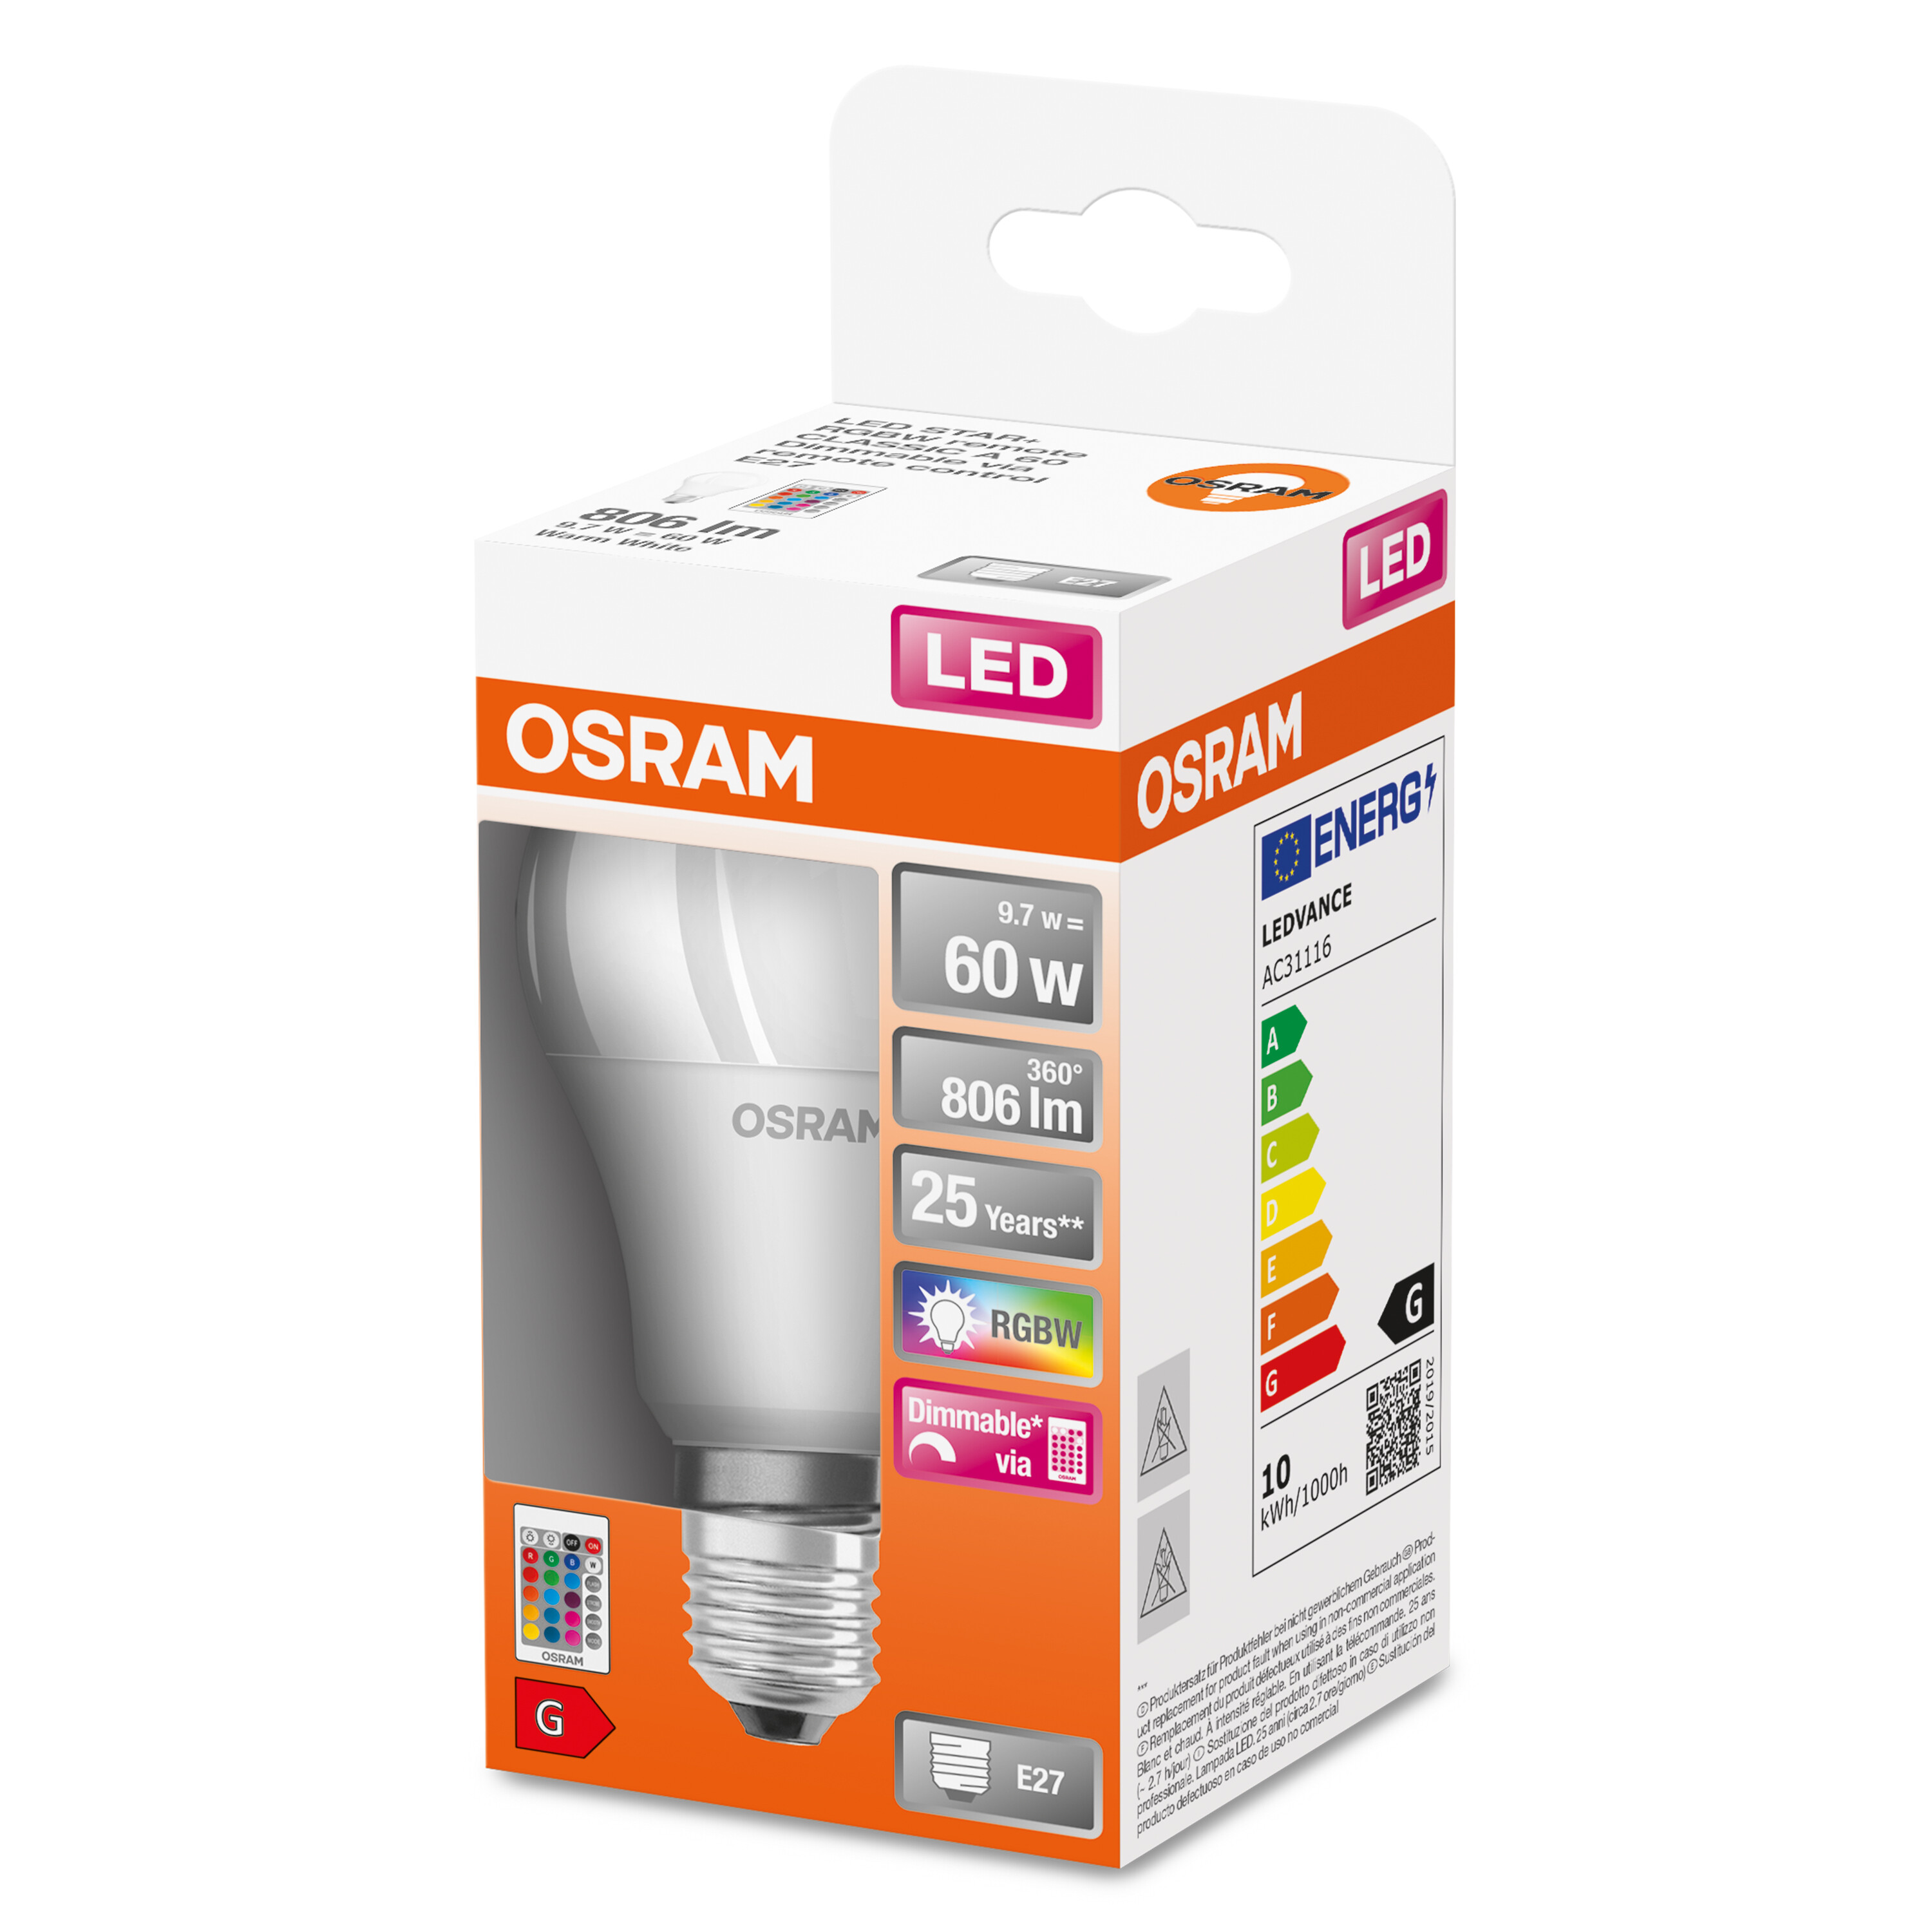 LED with remote lamps Warmweiß Retrofit control LED OSRAM  Lampe RGBW